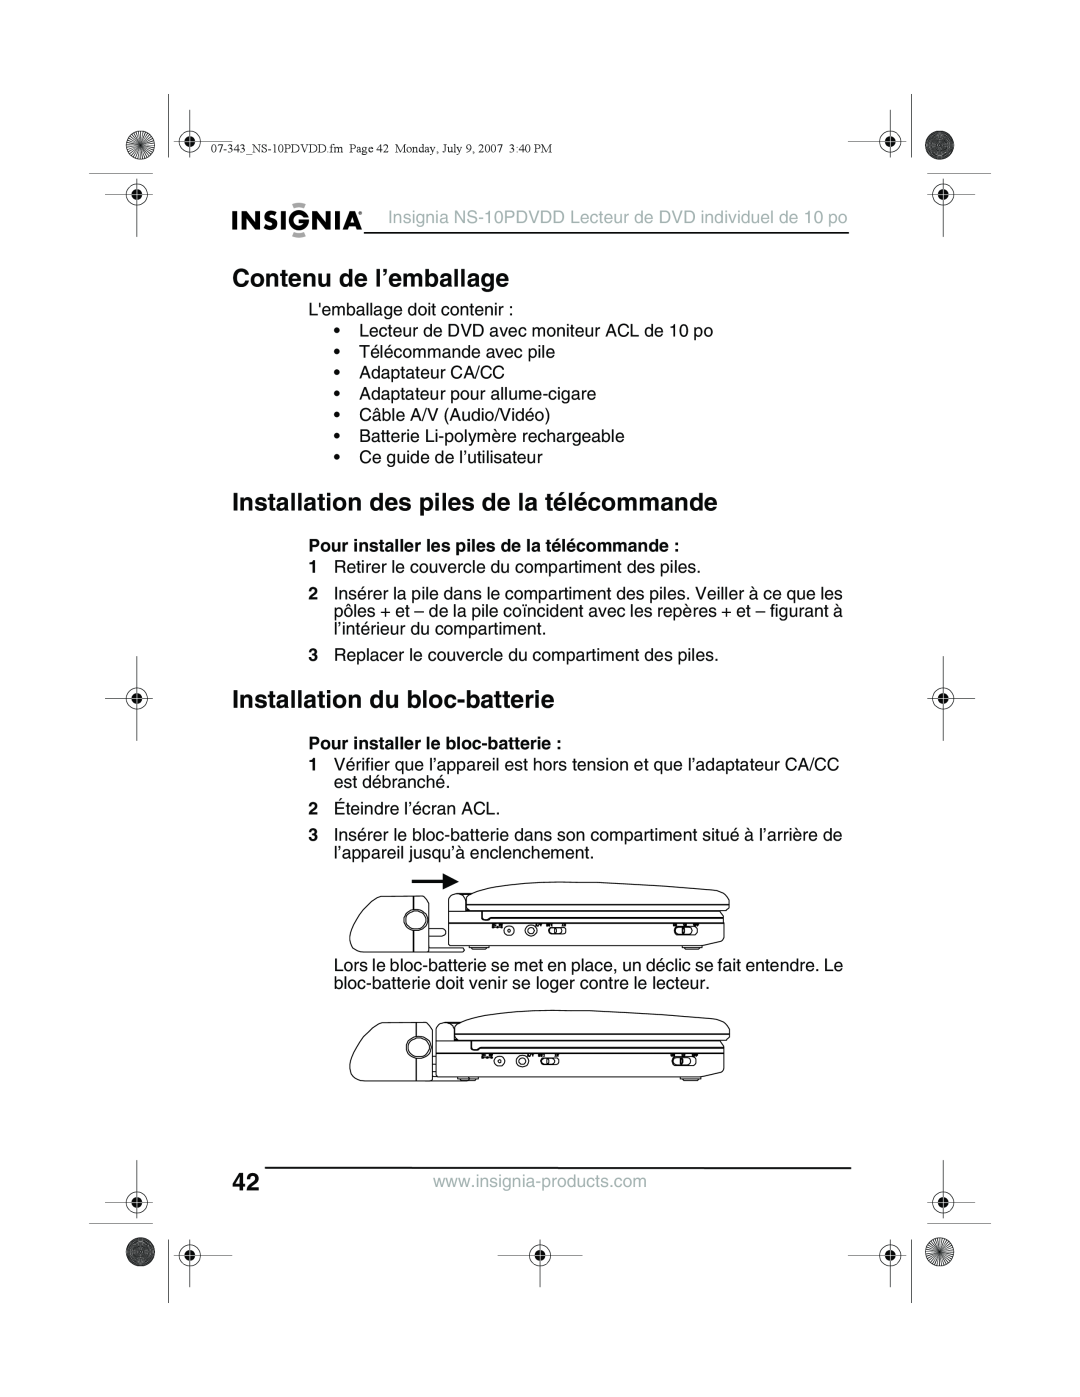 Insignia NS-10PDVDD manual Contenu de l’emballage, Installation des piles de la télécommande, Installation du bloc-batterie 